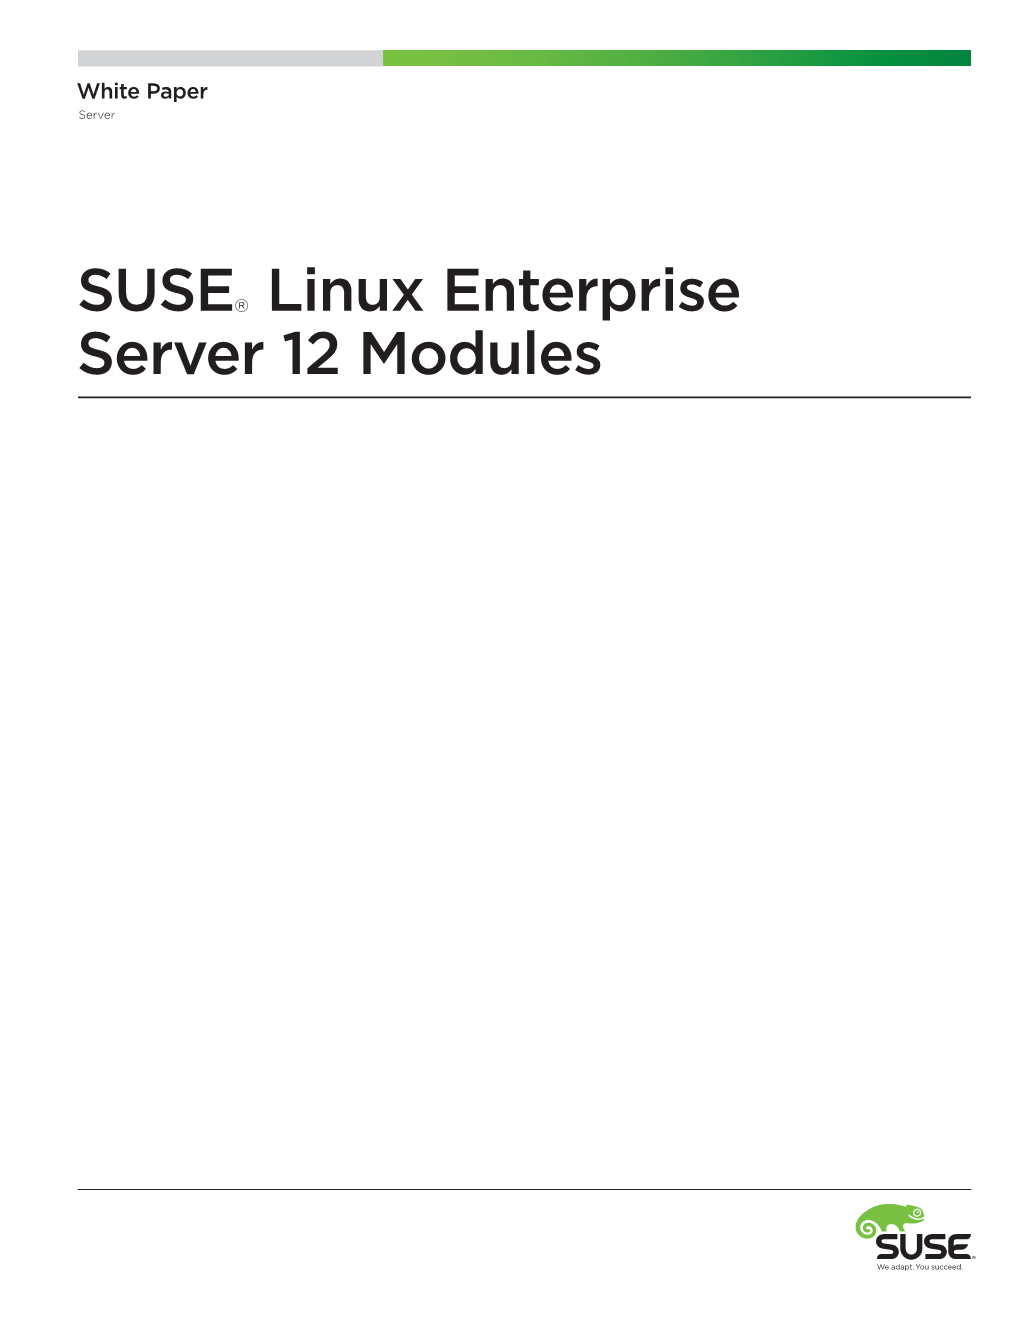 SUSE® Linux Enterprise Server 12 Modules Server White Paper SUSE Linux Enterprise Server 12 Modules